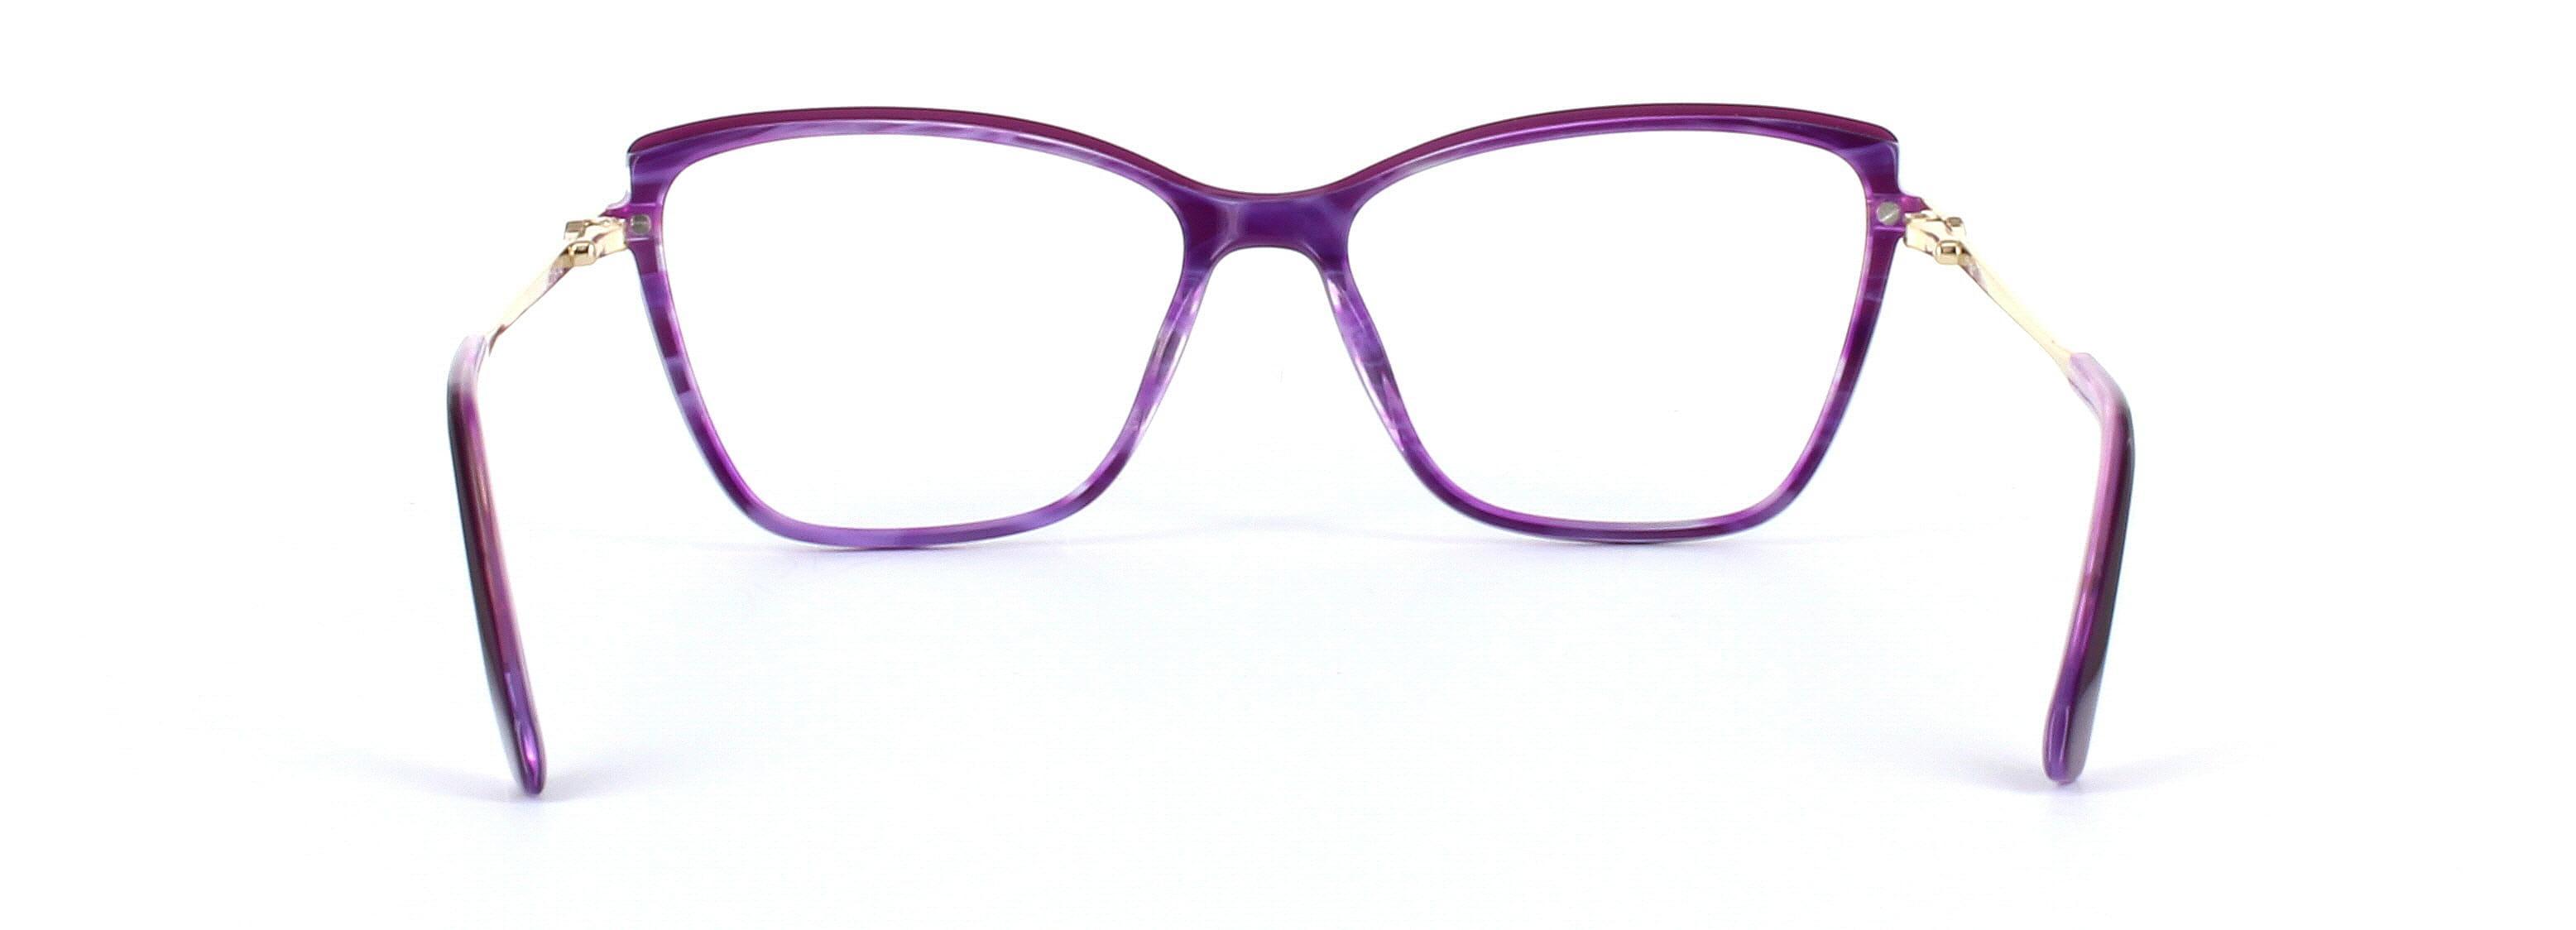 Jeanine Purple Full Rim Acetate Glasses - Image View 3